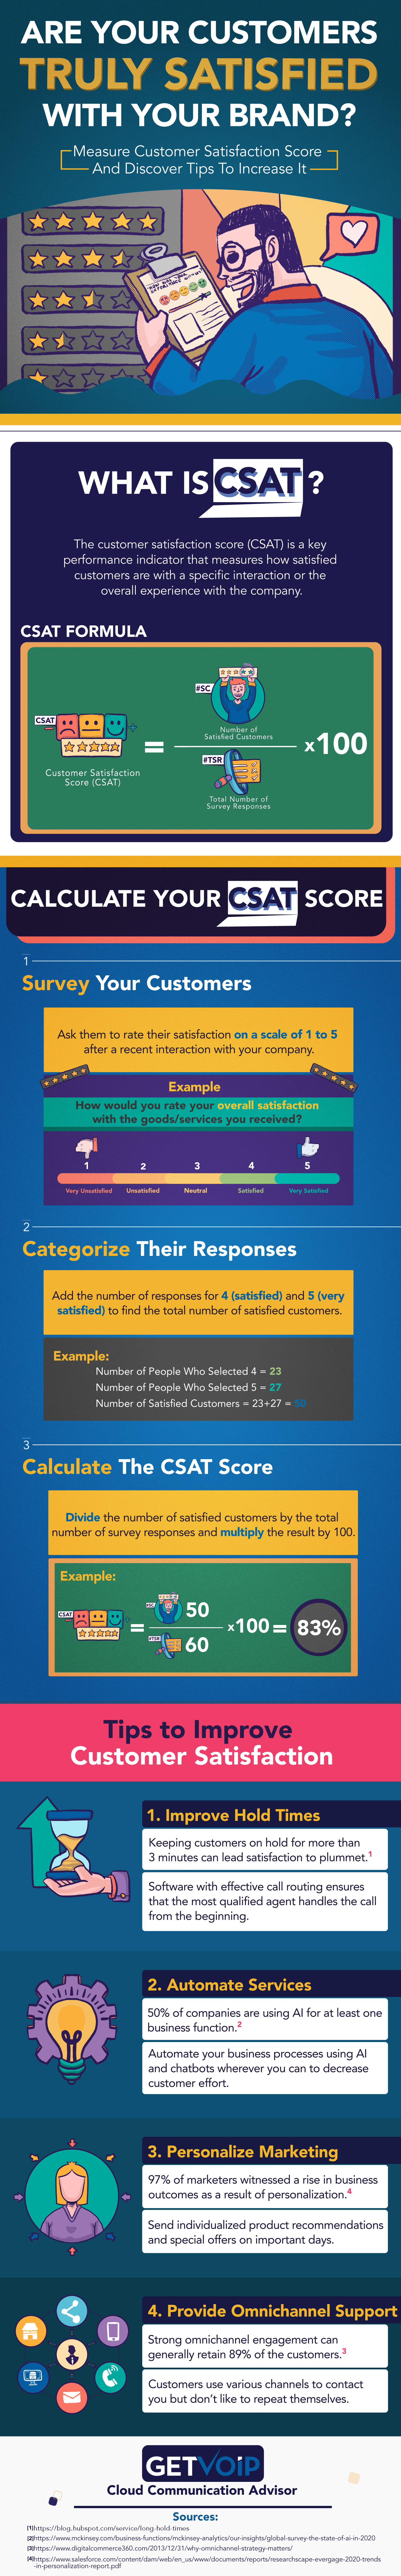 infographic - customer satisfaction (CSAT)